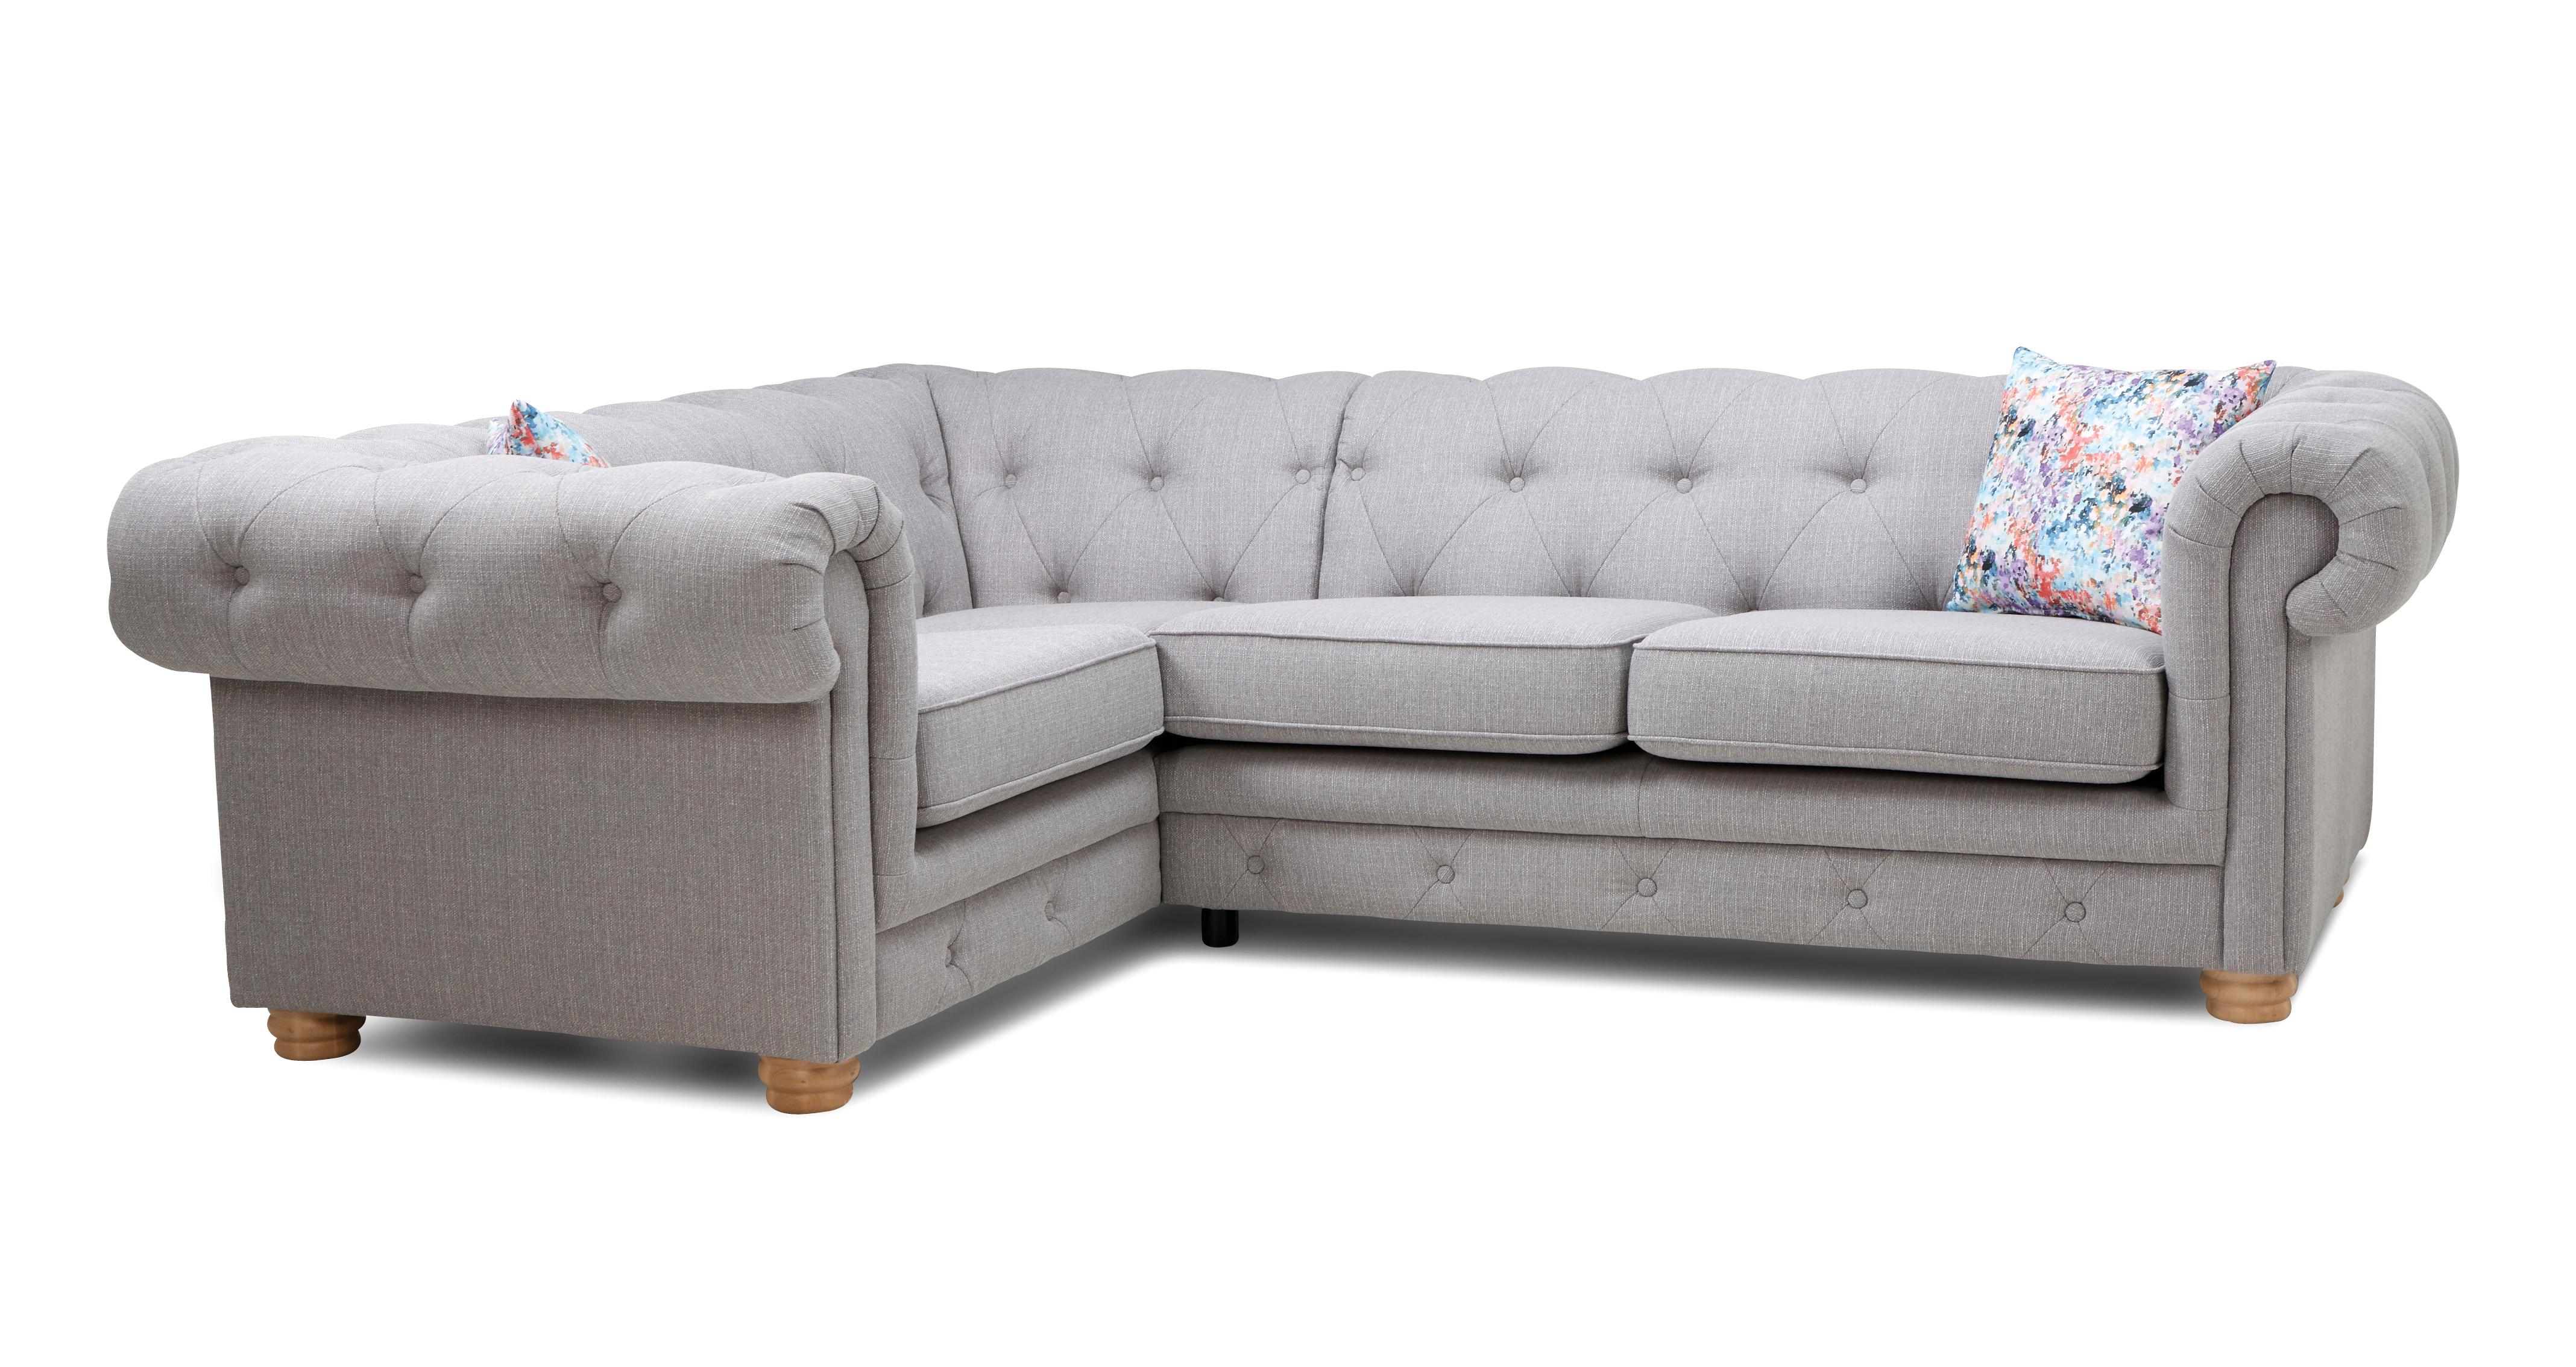 dfs blue leather corner sofa